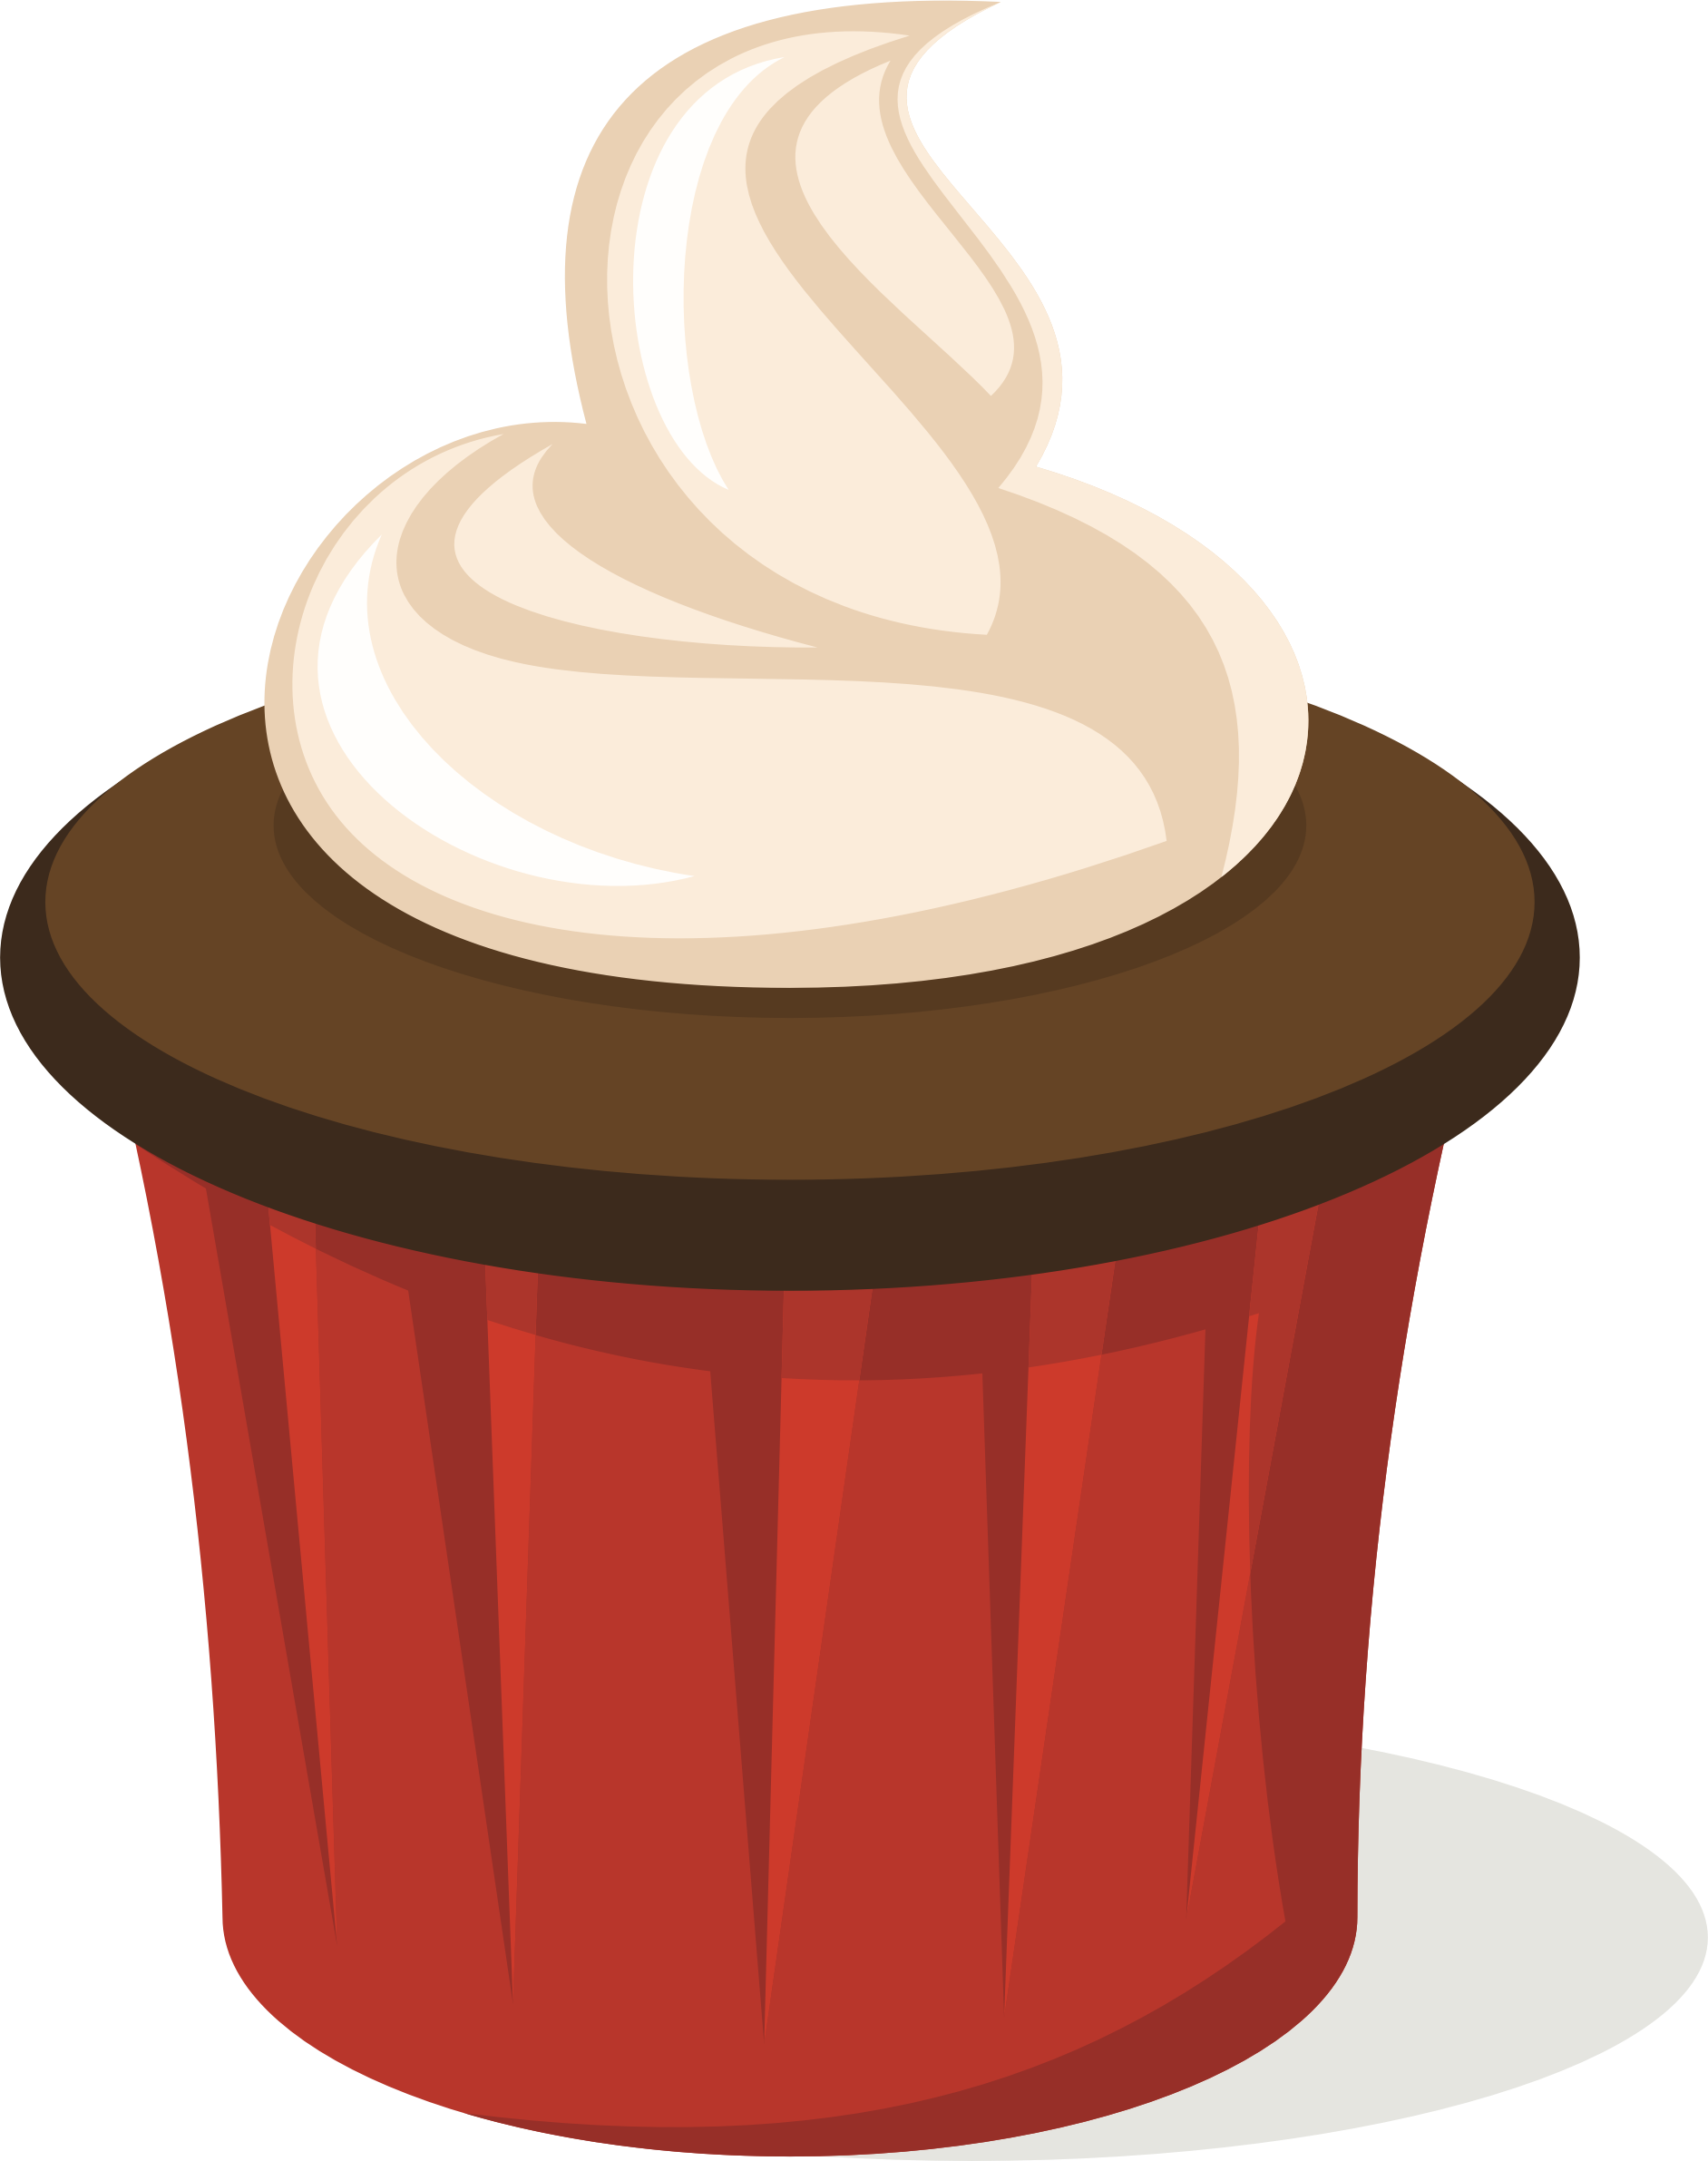 The Tiny Cakes logo, a stylized cartoon cupcake.